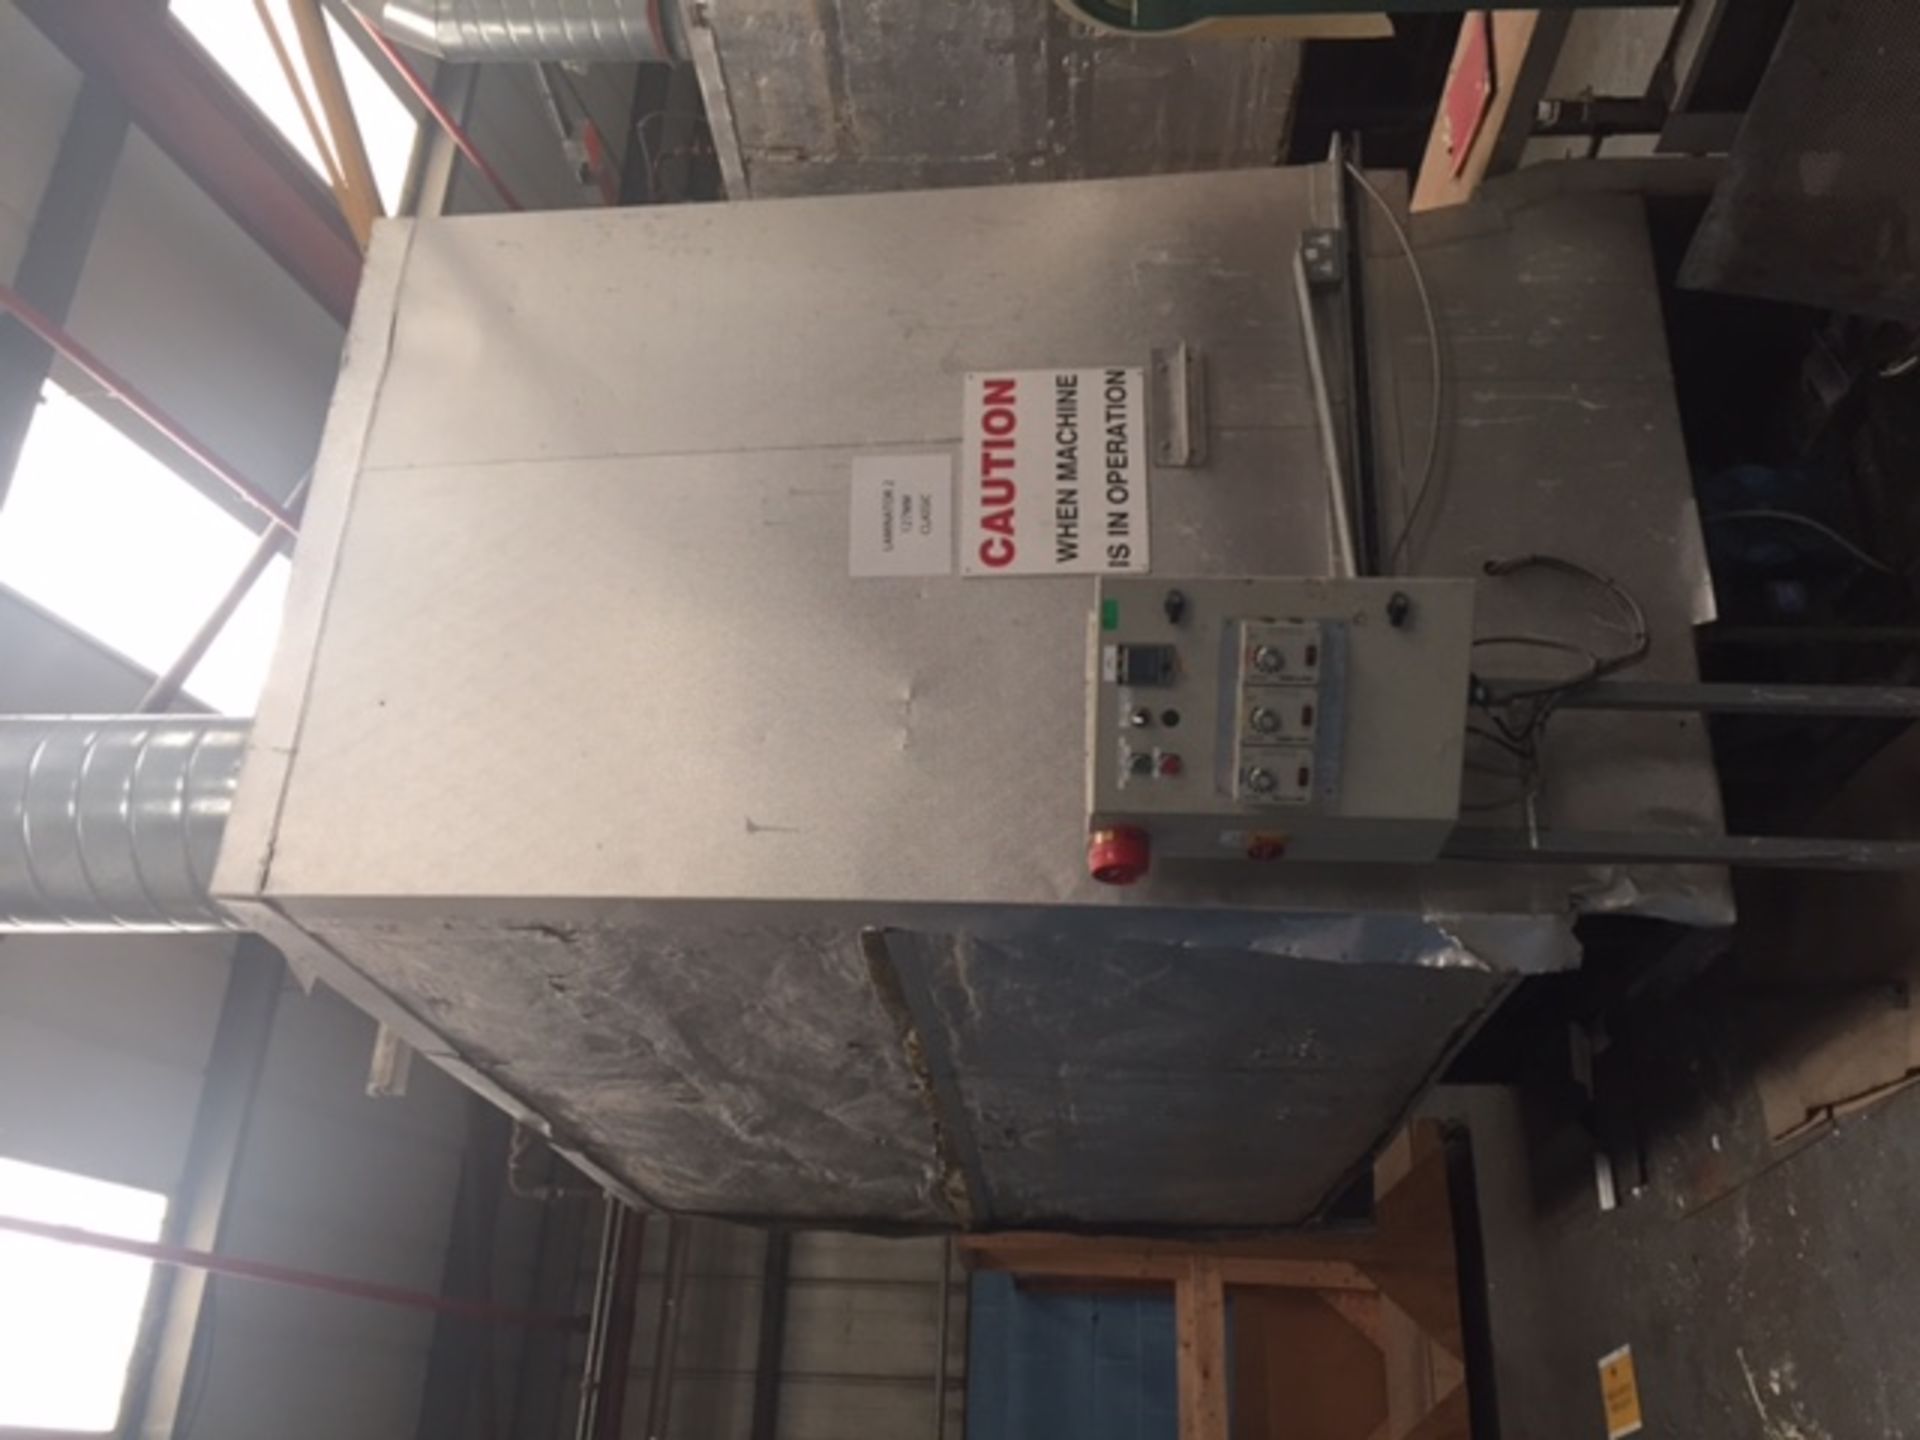 Lamination drying machine approx measurements 4m x 2.5m x 3.5m high